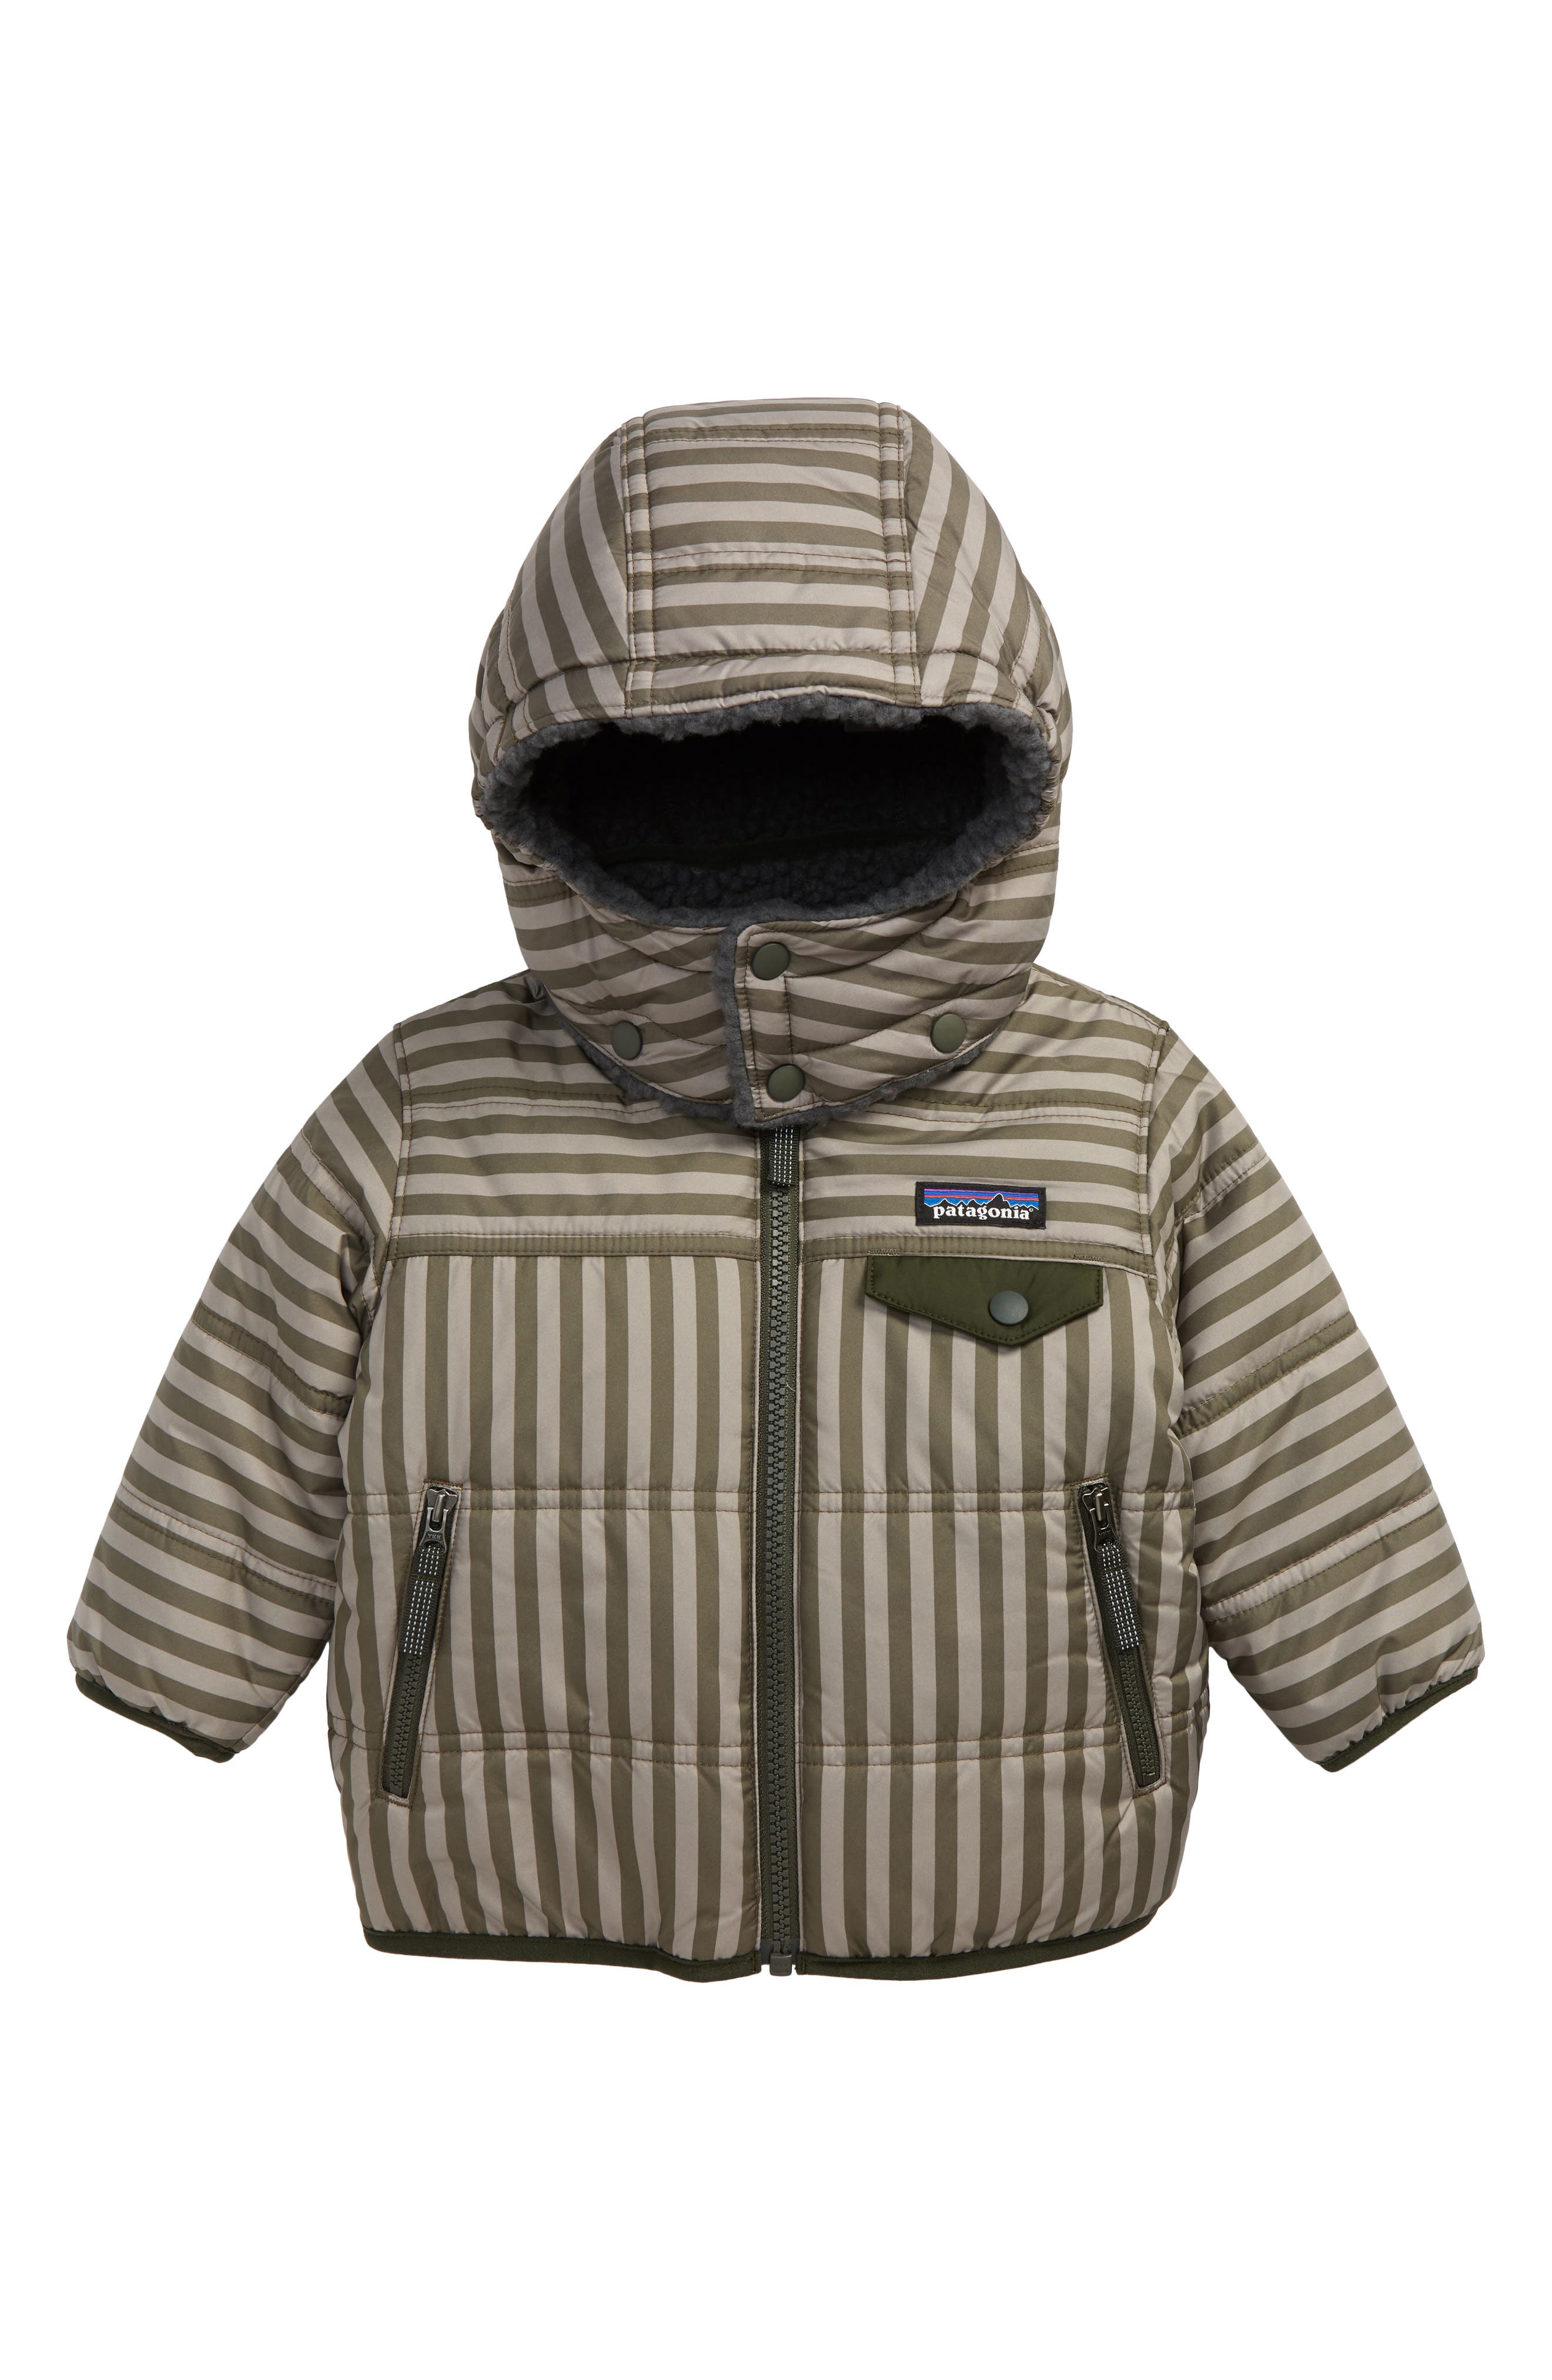 nordstrom baby jacket